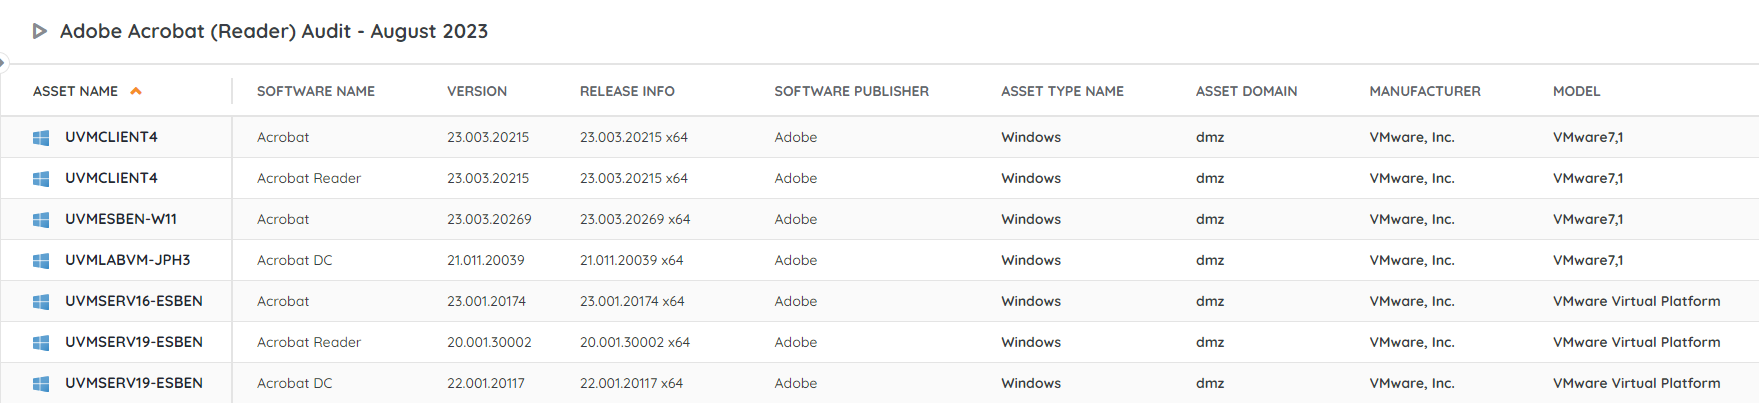 Adobe Acrobat (Reader) Security Update Audit - August 2023